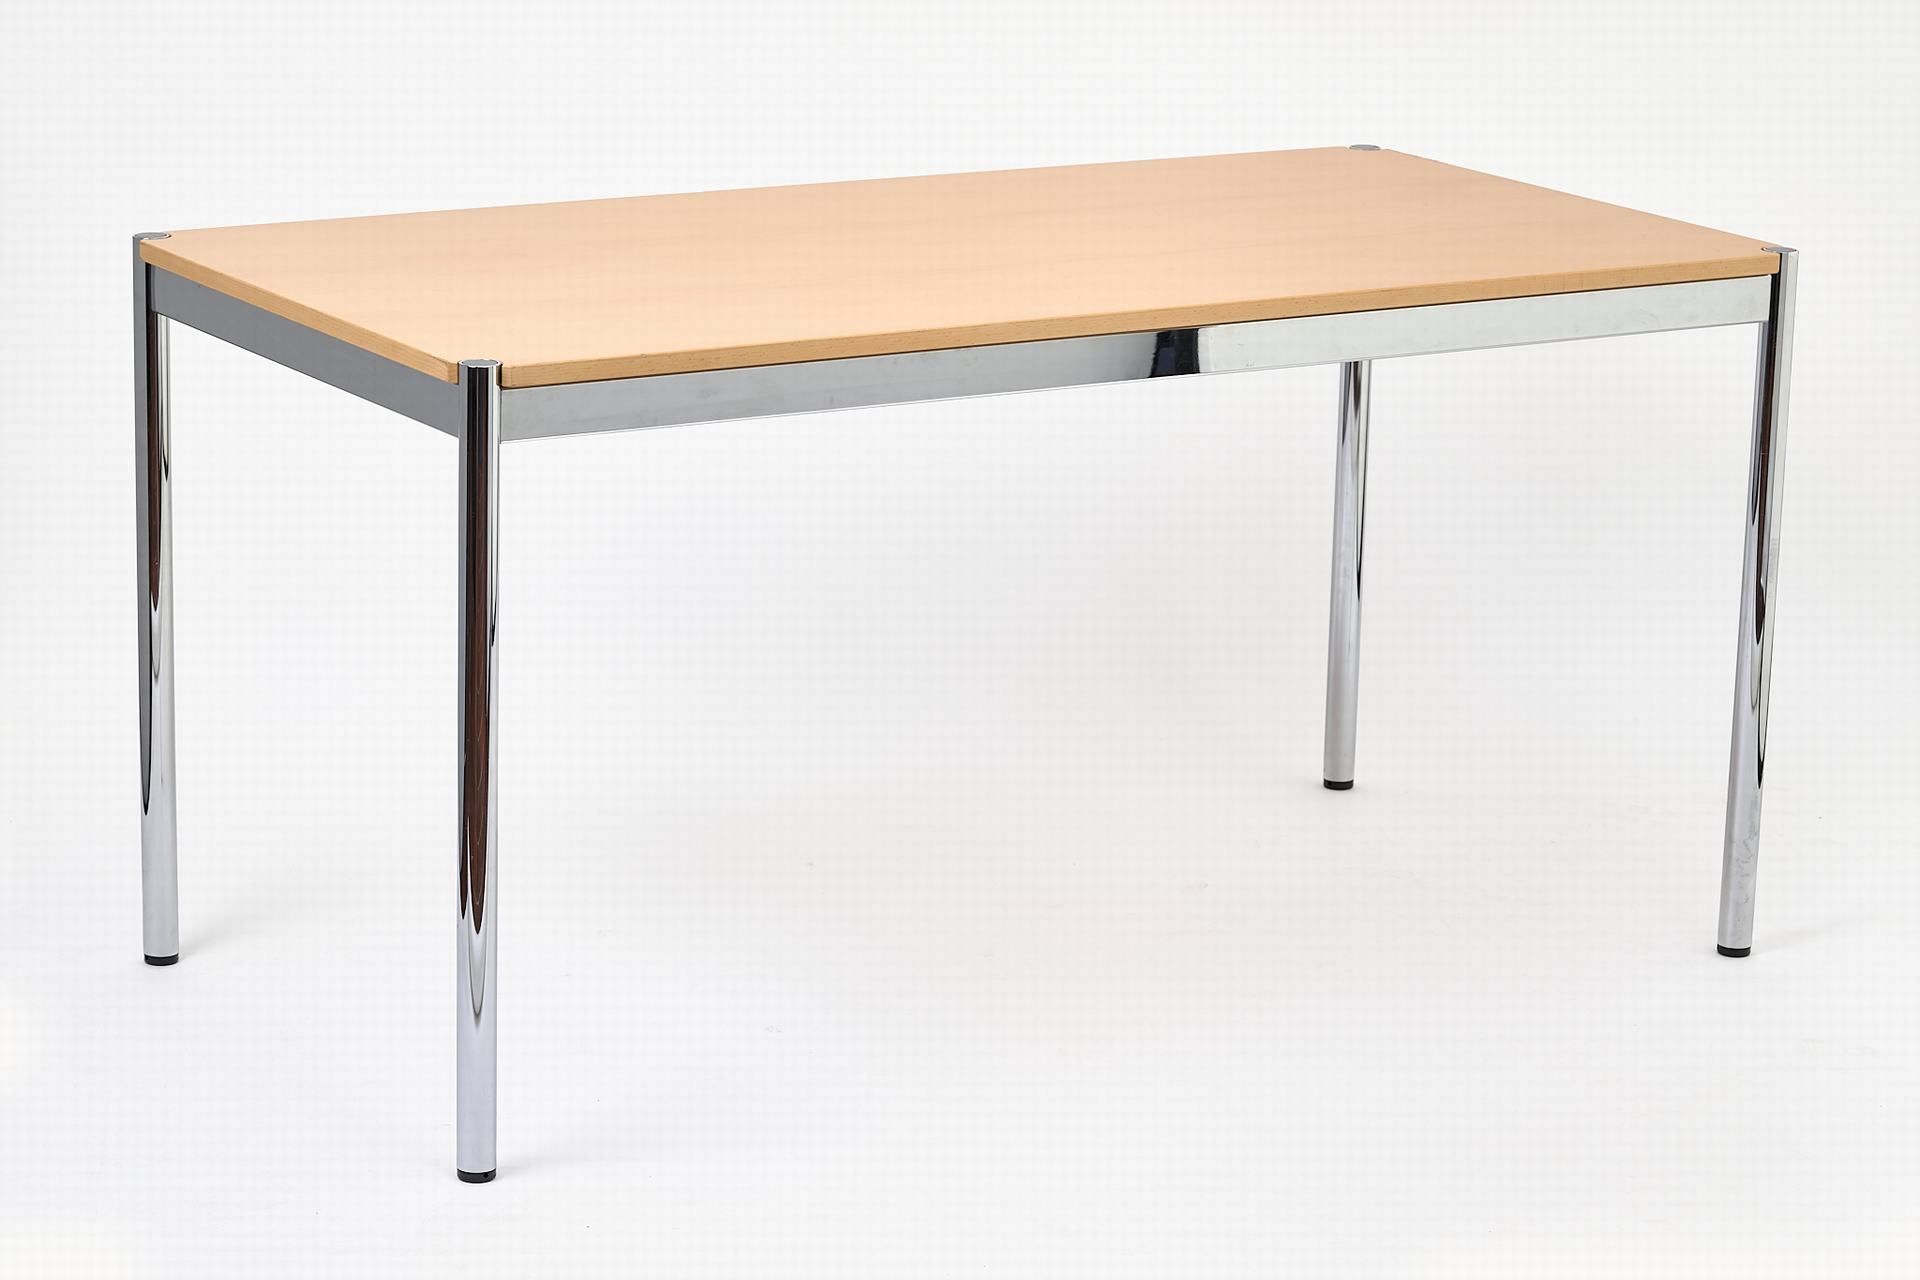 USM Haller Tisch 镀铬金属桌腿和框架。木质桌面（有磨损痕迹）。有 USM 标签。高 74 厘米。宽 150 厘米。长 75 厘米